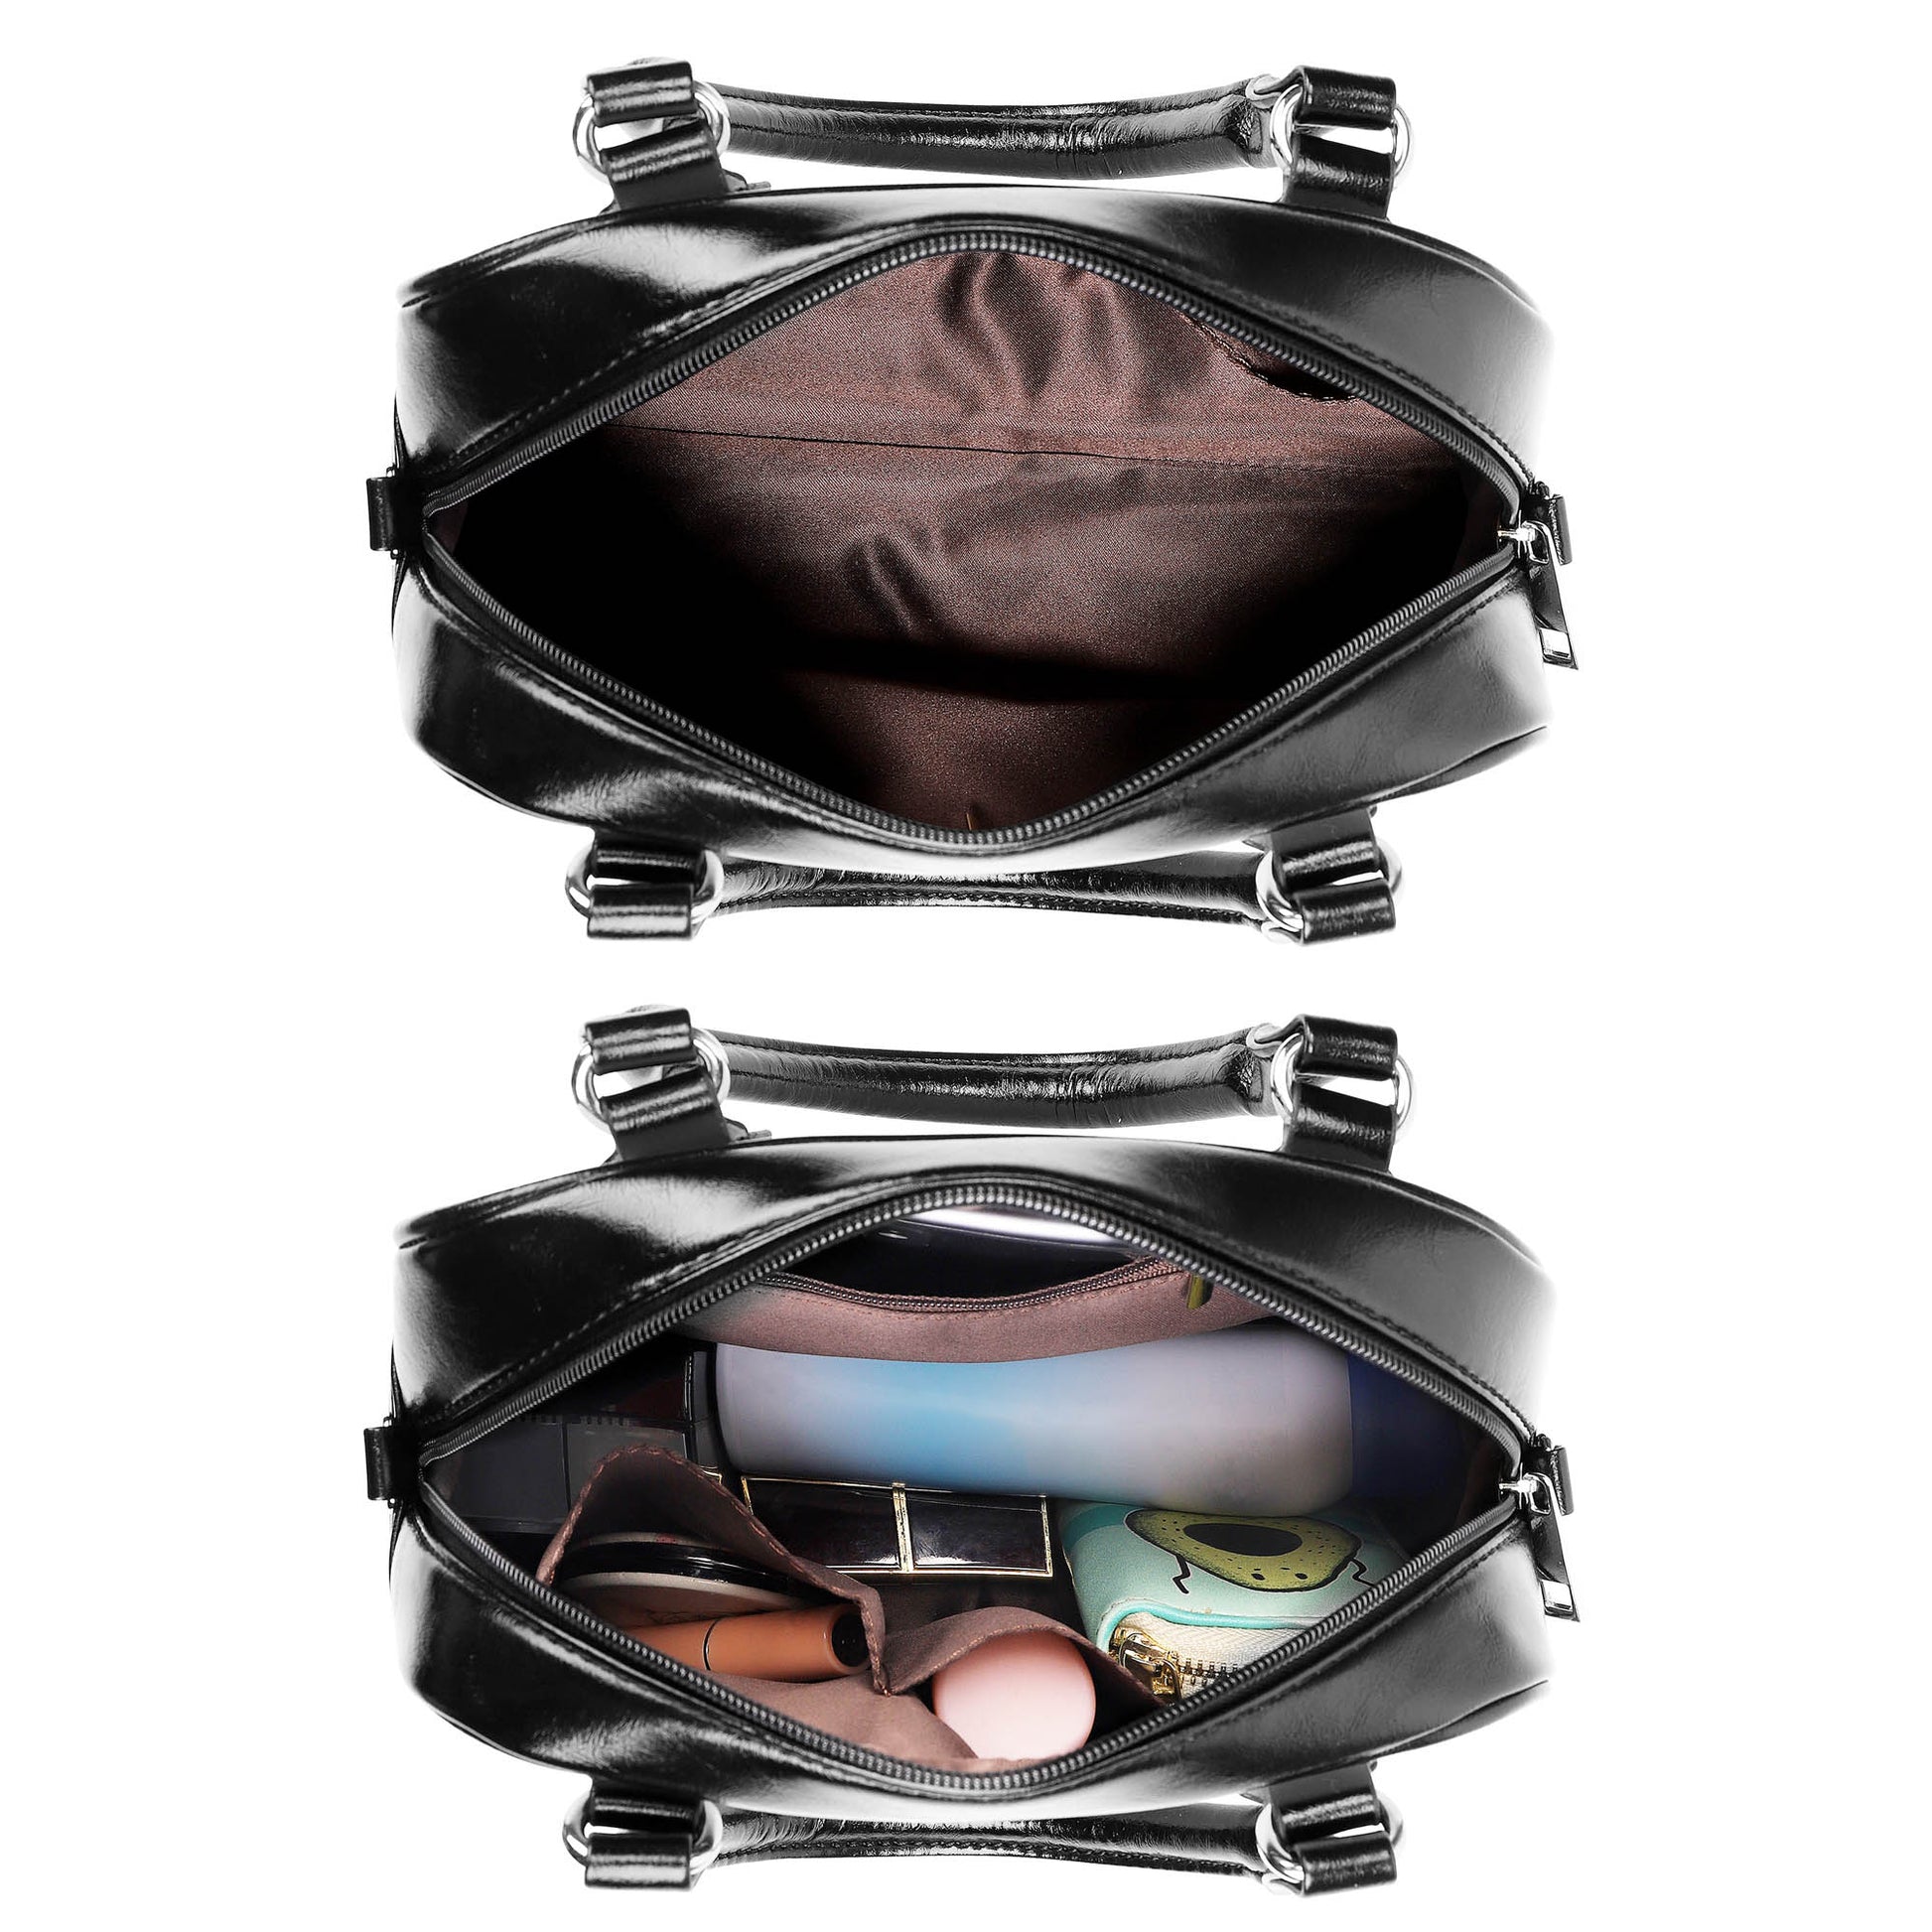 Hyndman Tartan Shoulder Handbags - Tartanvibesclothing